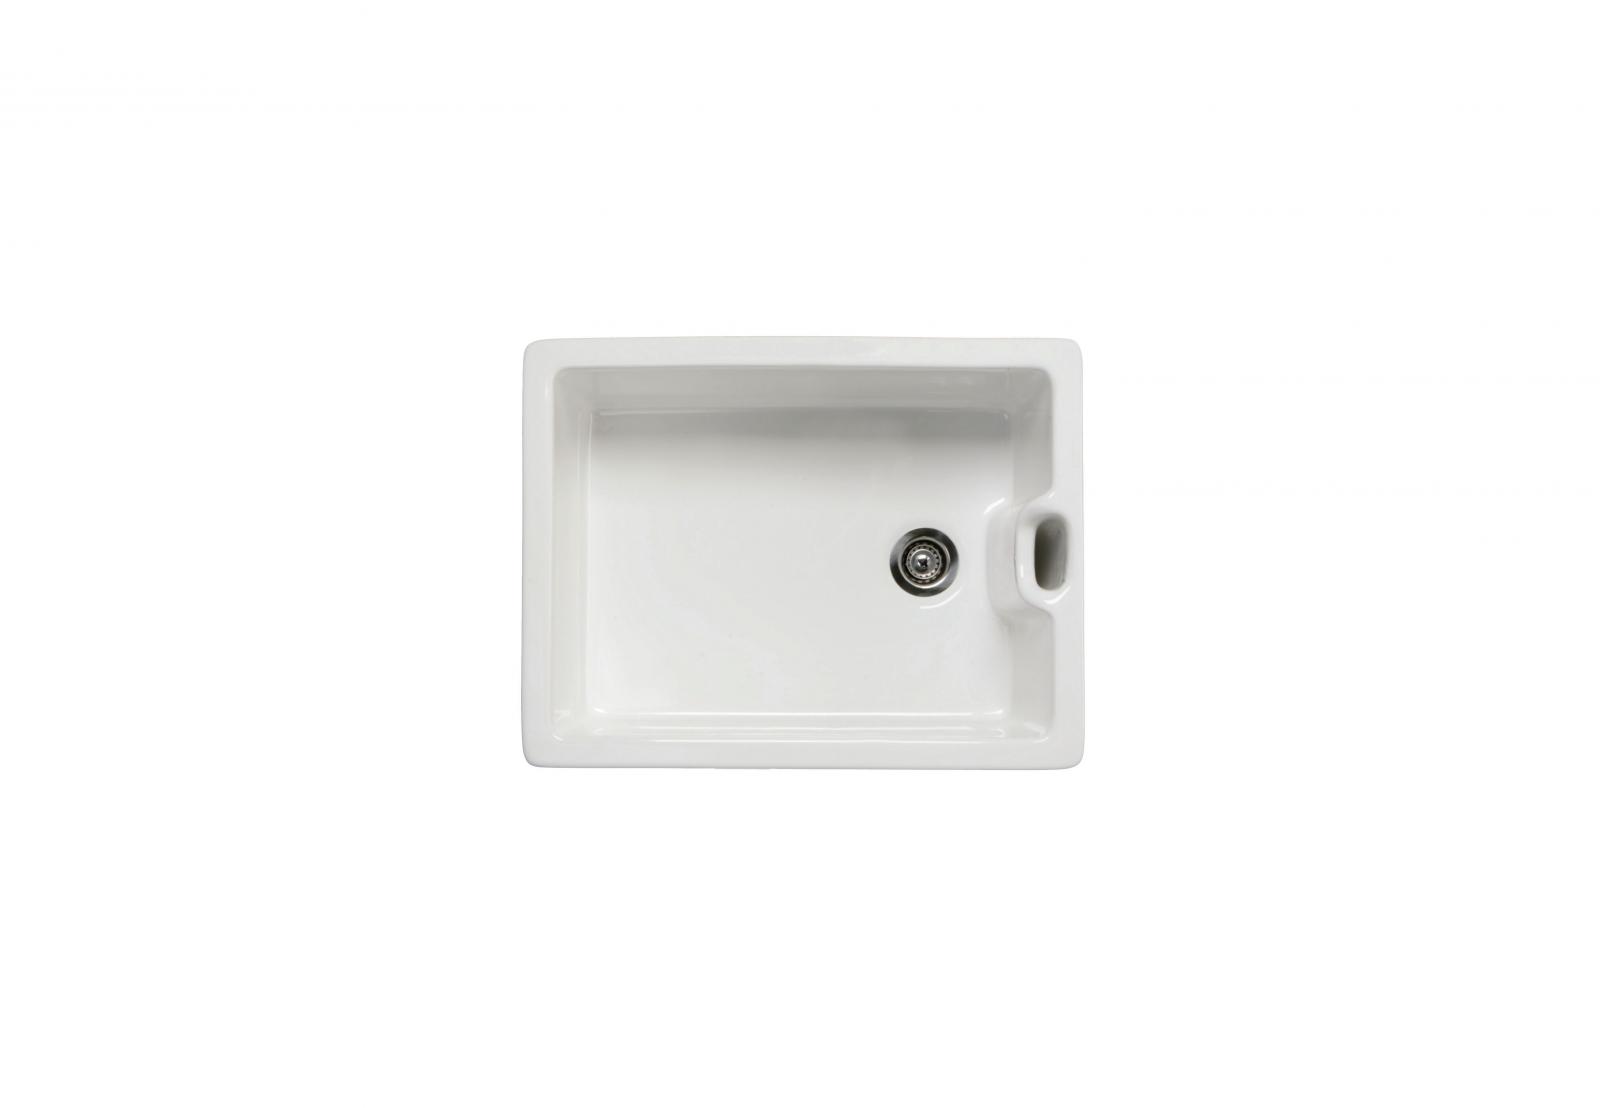 High-quality sink Clovis - single bowl, ceramic